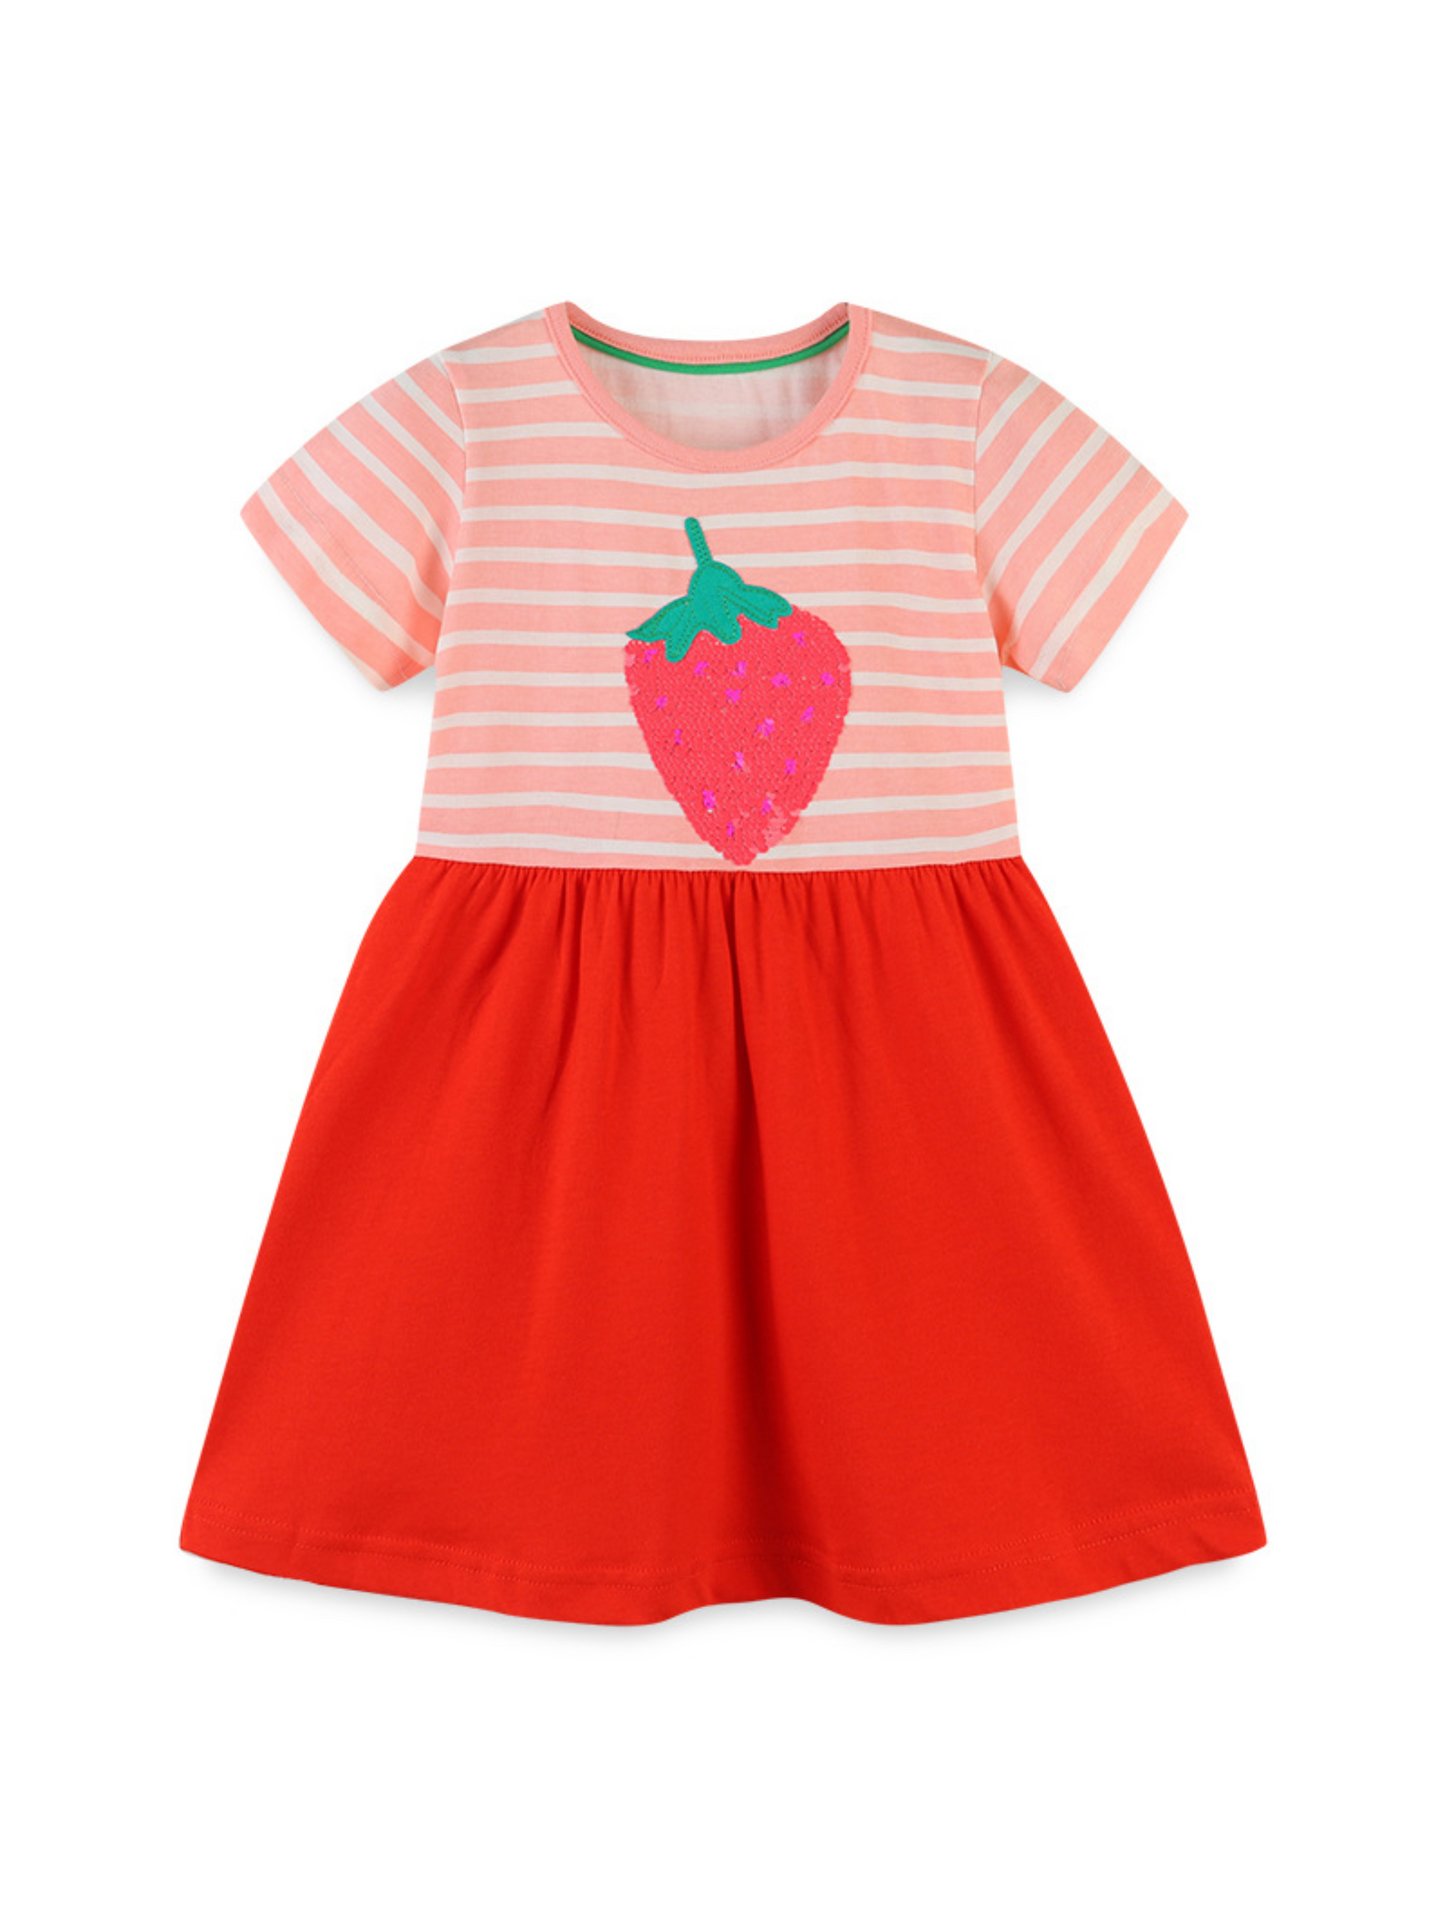 Strawberry sequin Dress